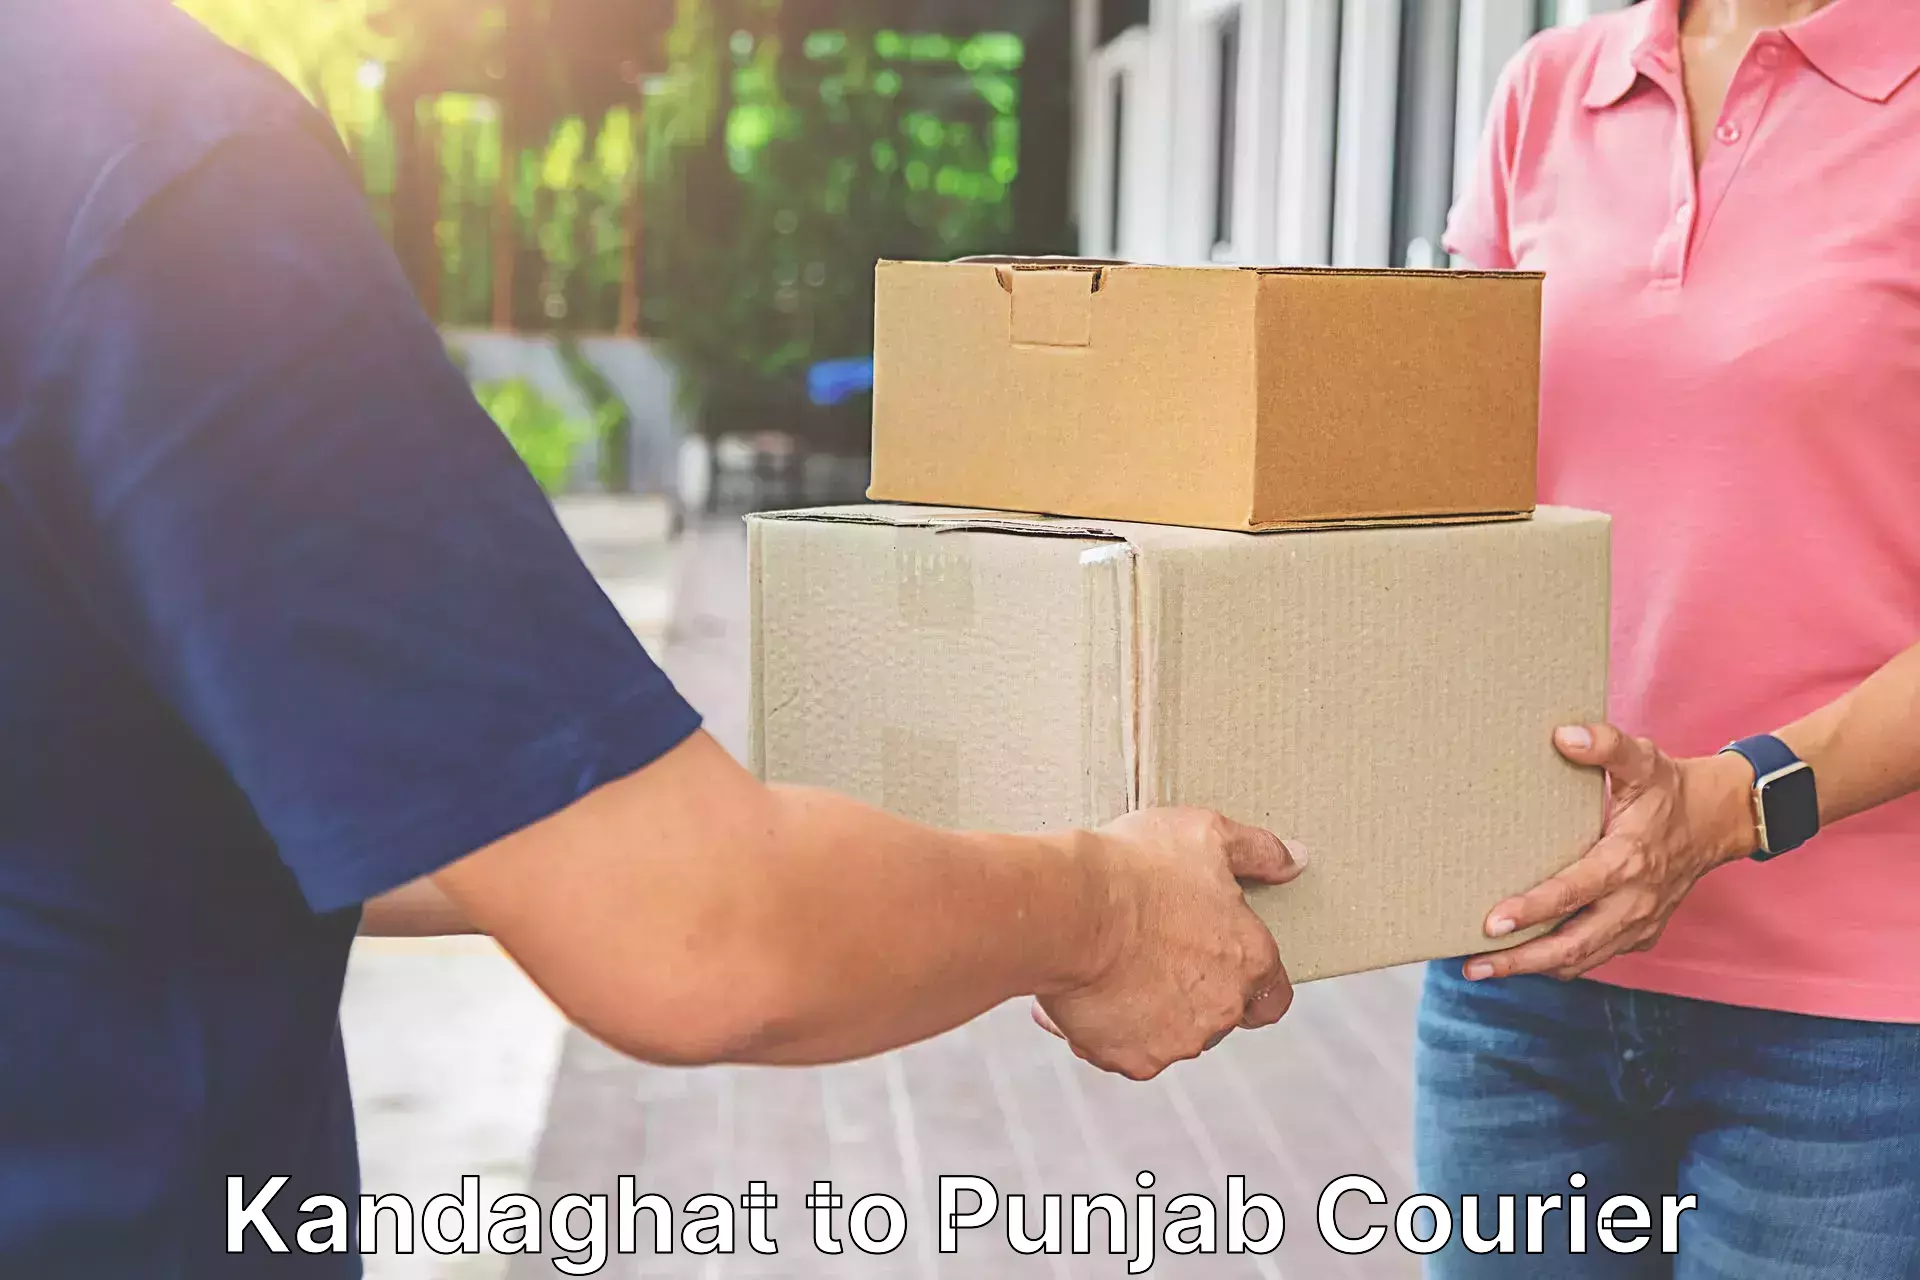 Pharmaceutical courier Kandaghat to Punjab